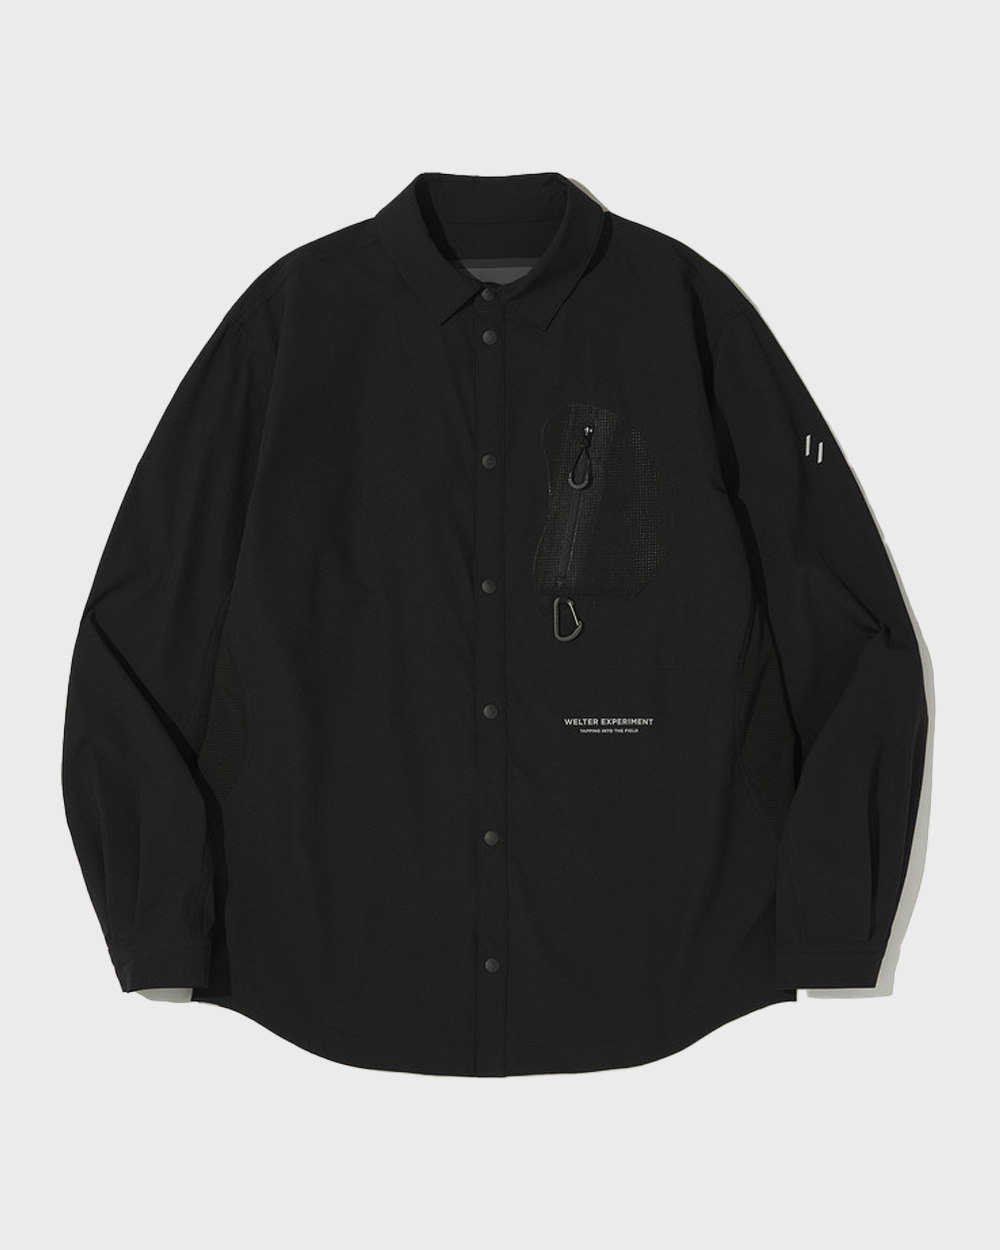 Heart Pocket Shirt Jacket (Black)